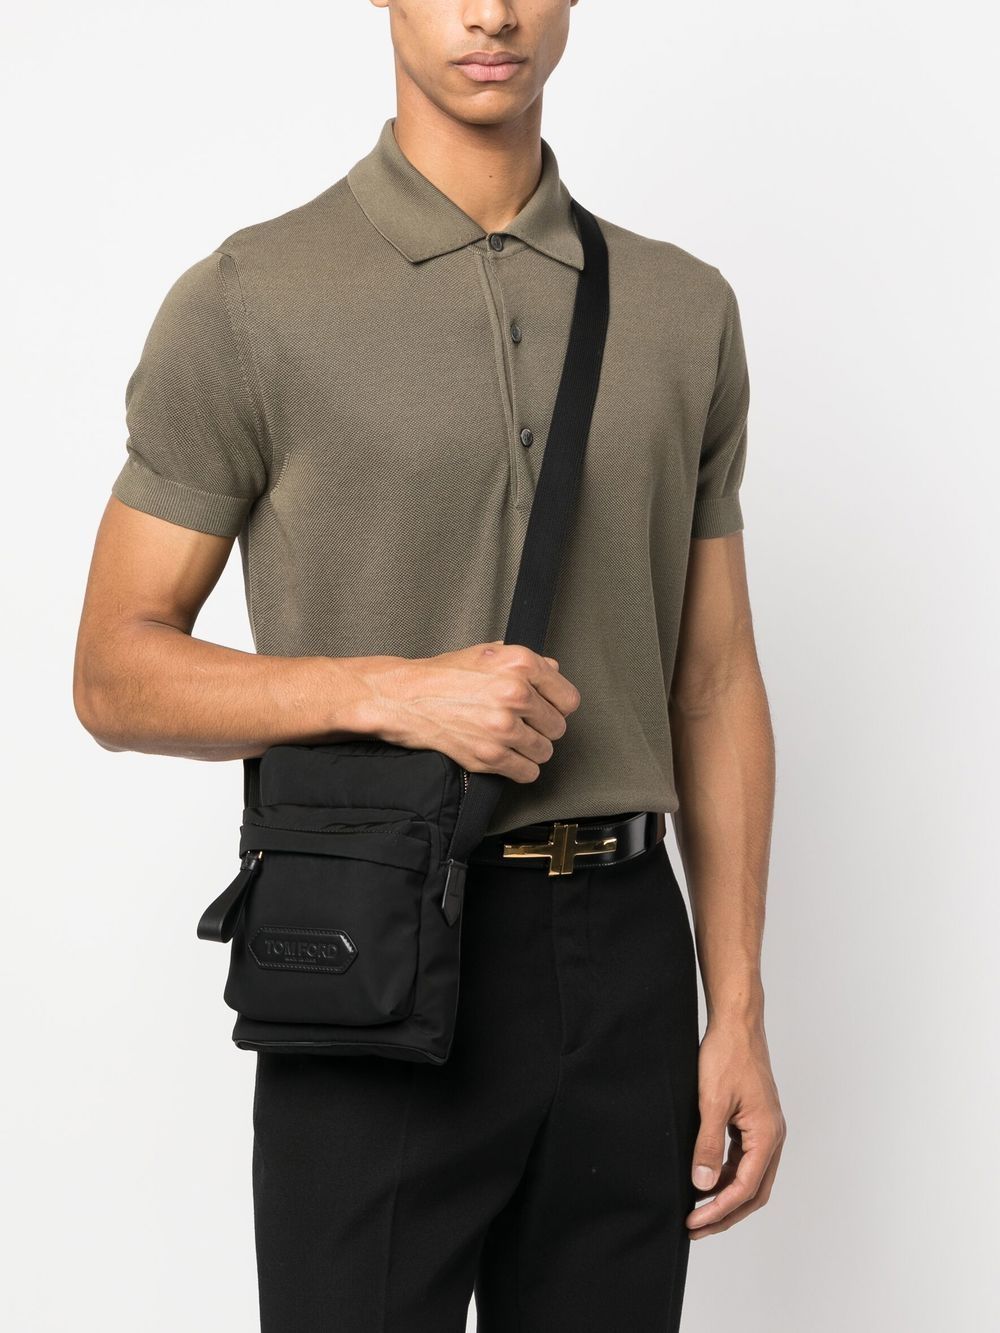 Black Leather Raffia Messenger Handbag for Men